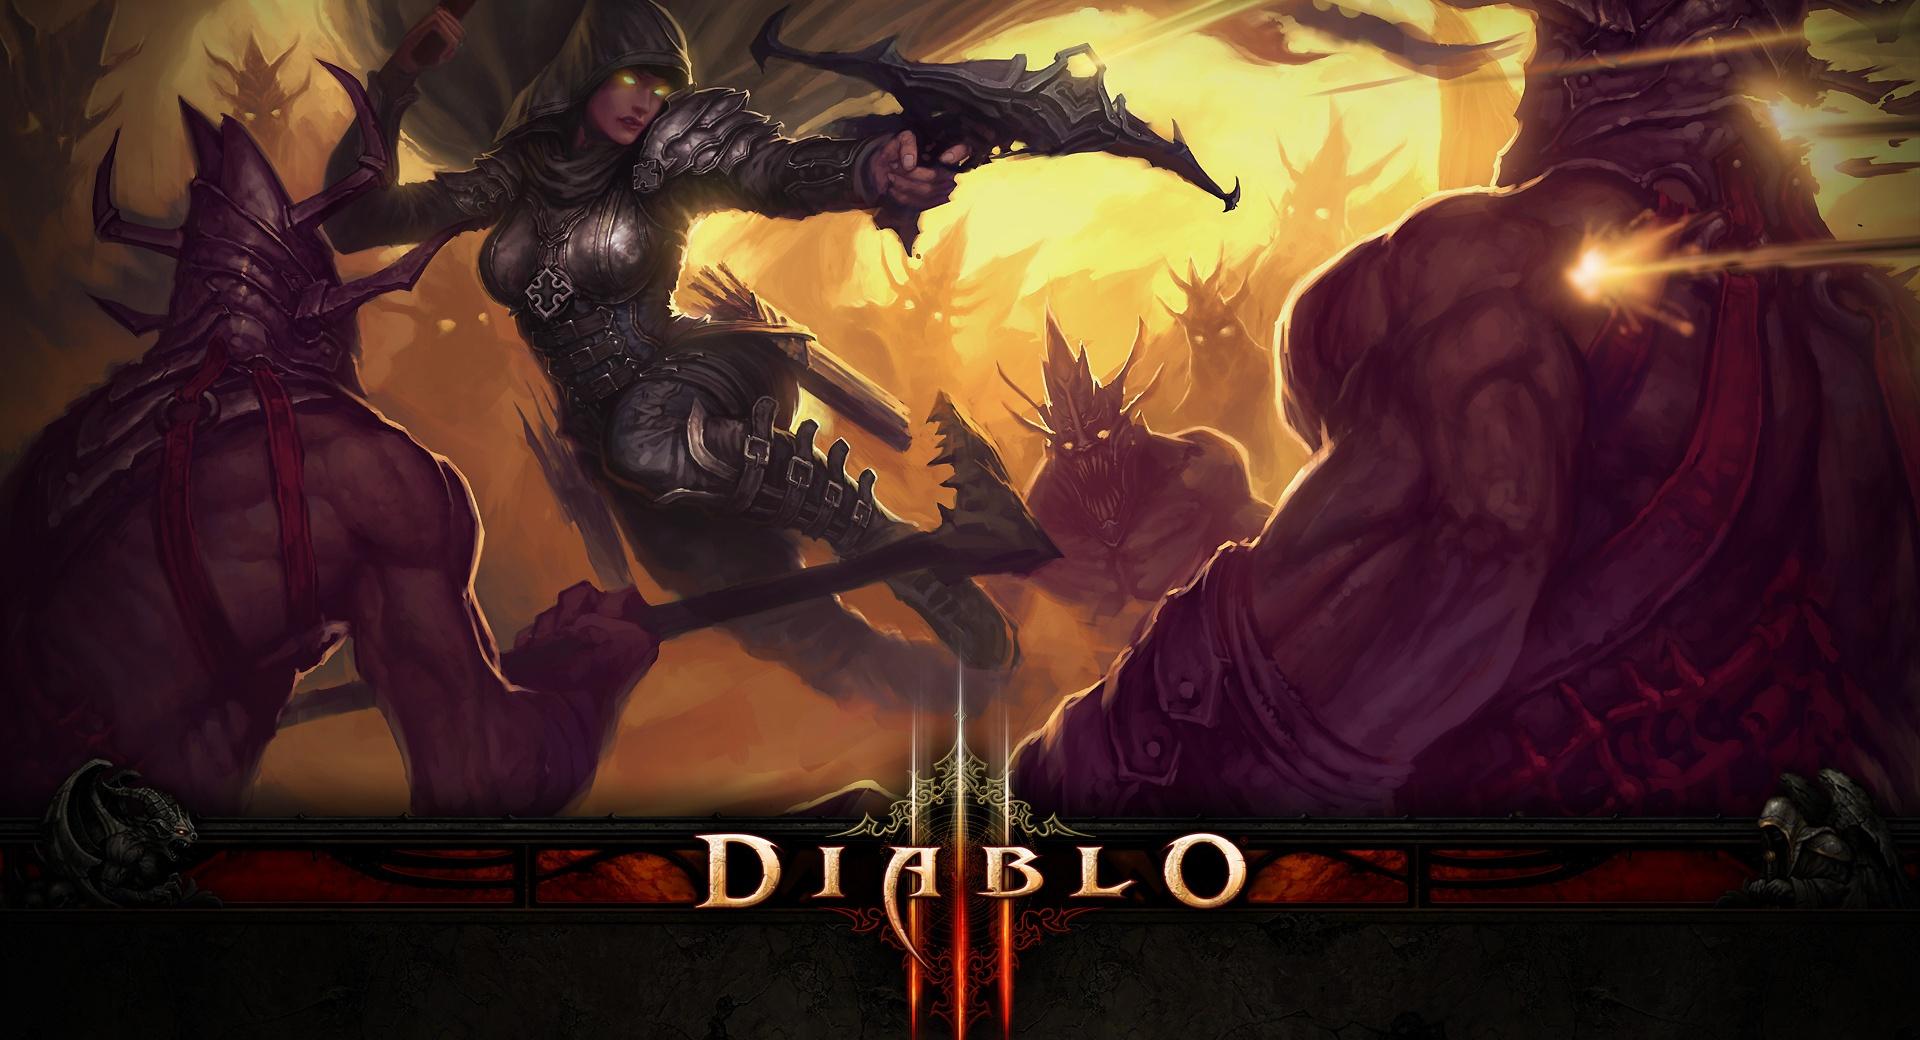 Diablo III Demon Hunter at 1024 x 768 size wallpapers HD quality